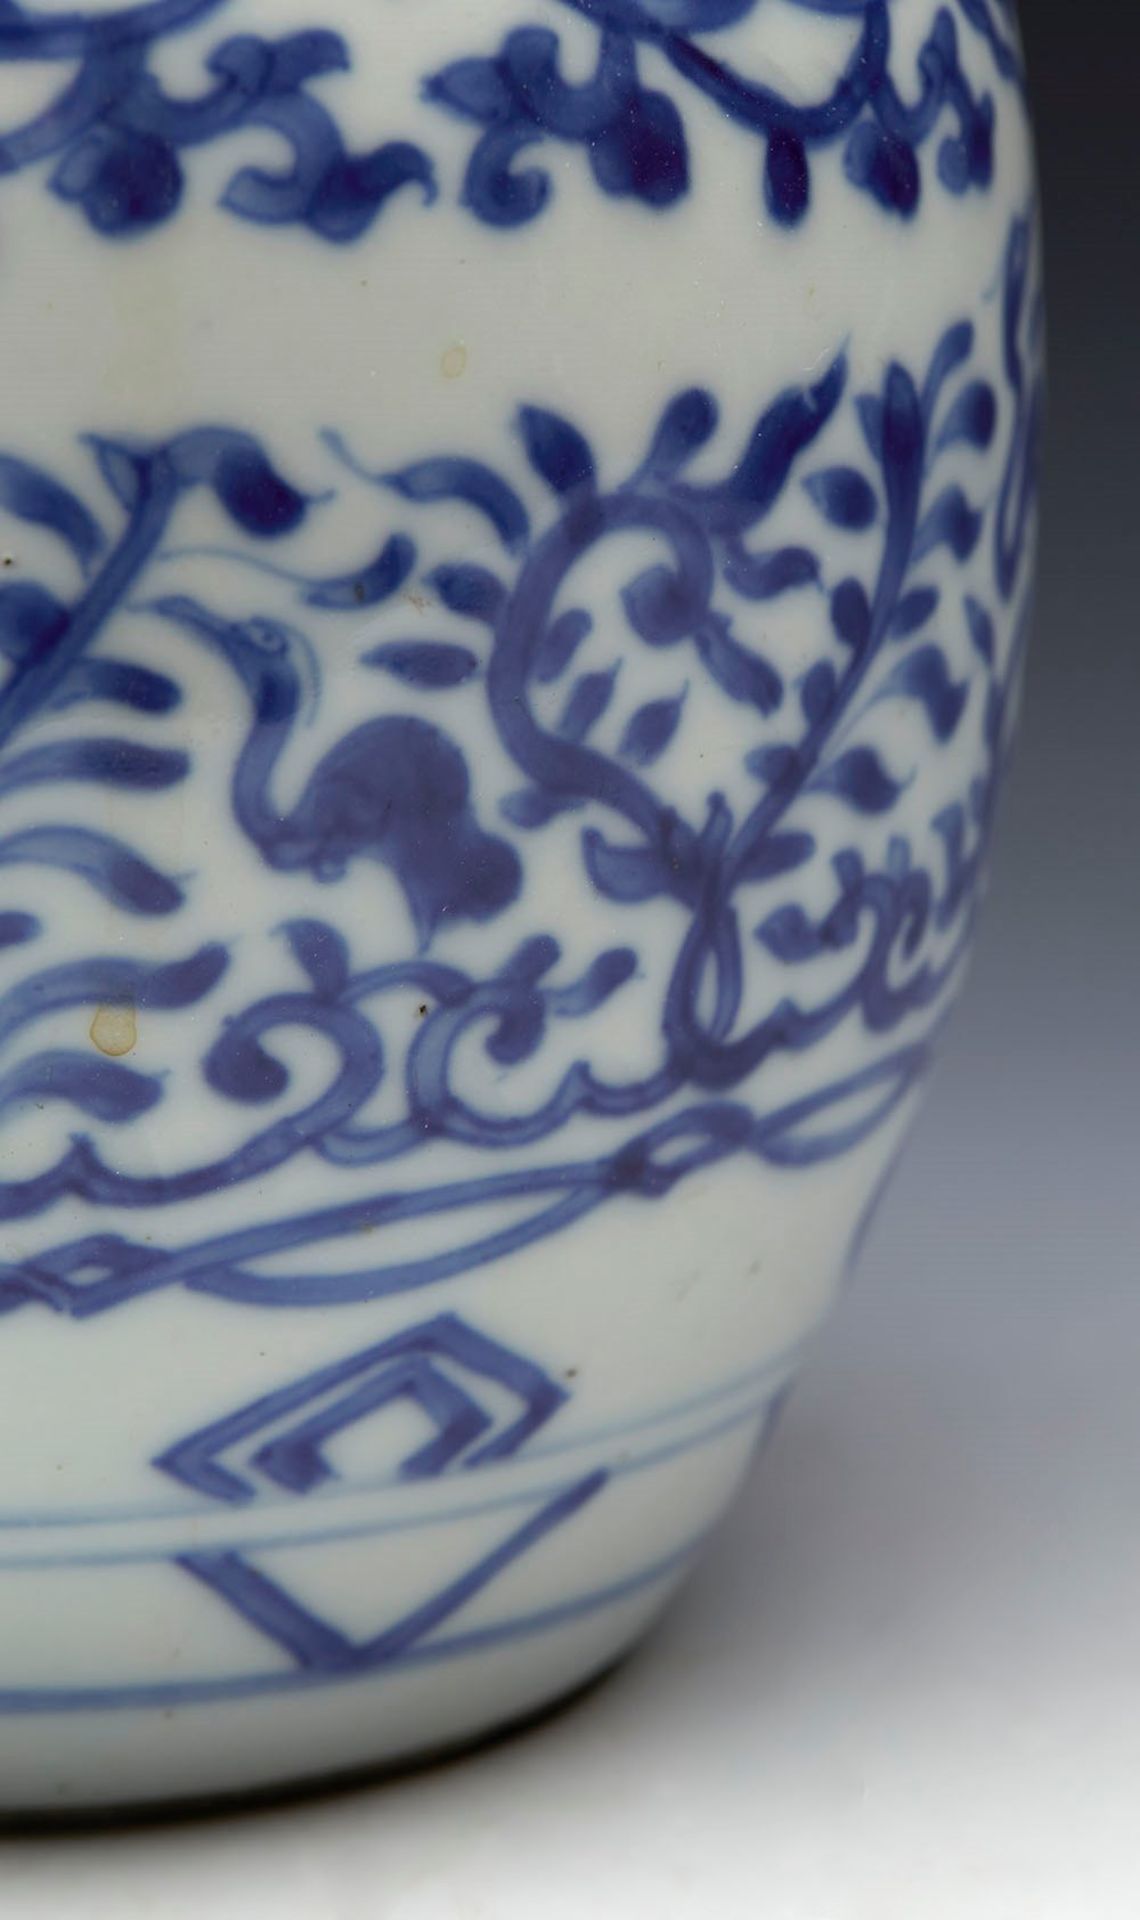 Antique Chinese Kangxi Jar With Exotic Birds 1662 - 1722 - Image 7 of 10